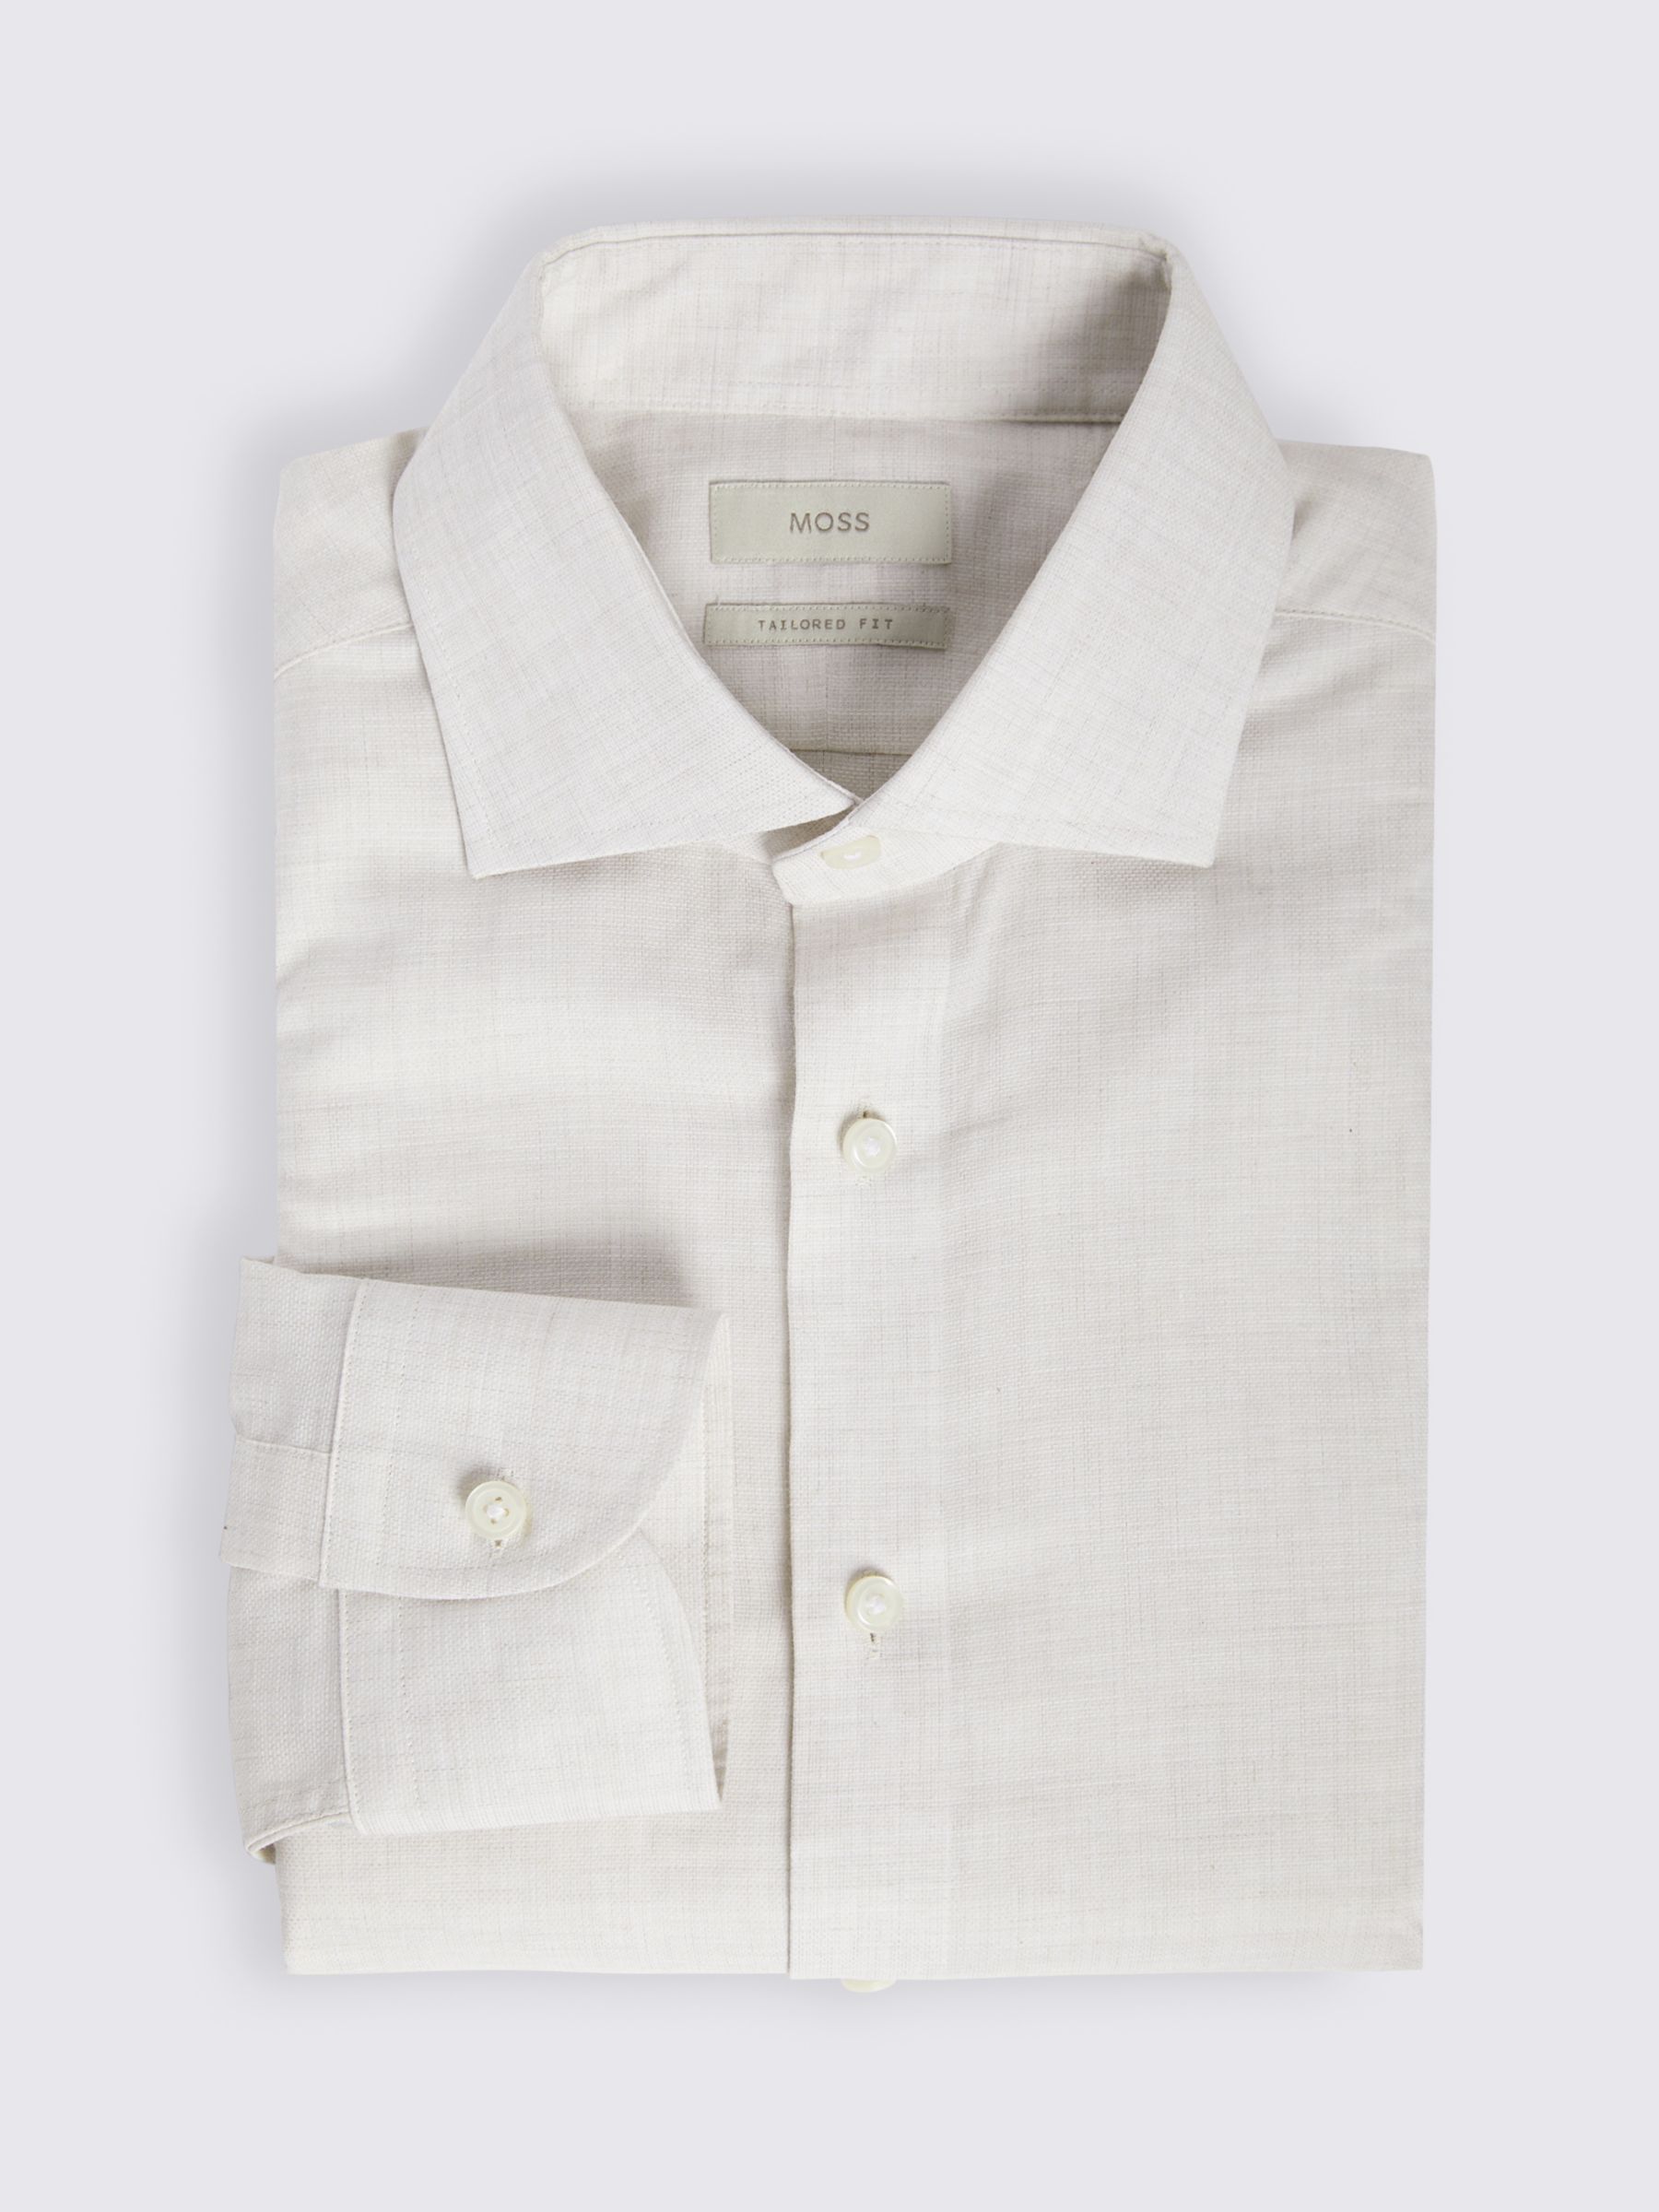 Moss Tailored Fit Long Sleeve Melange Shirt, Ivory, 14.5